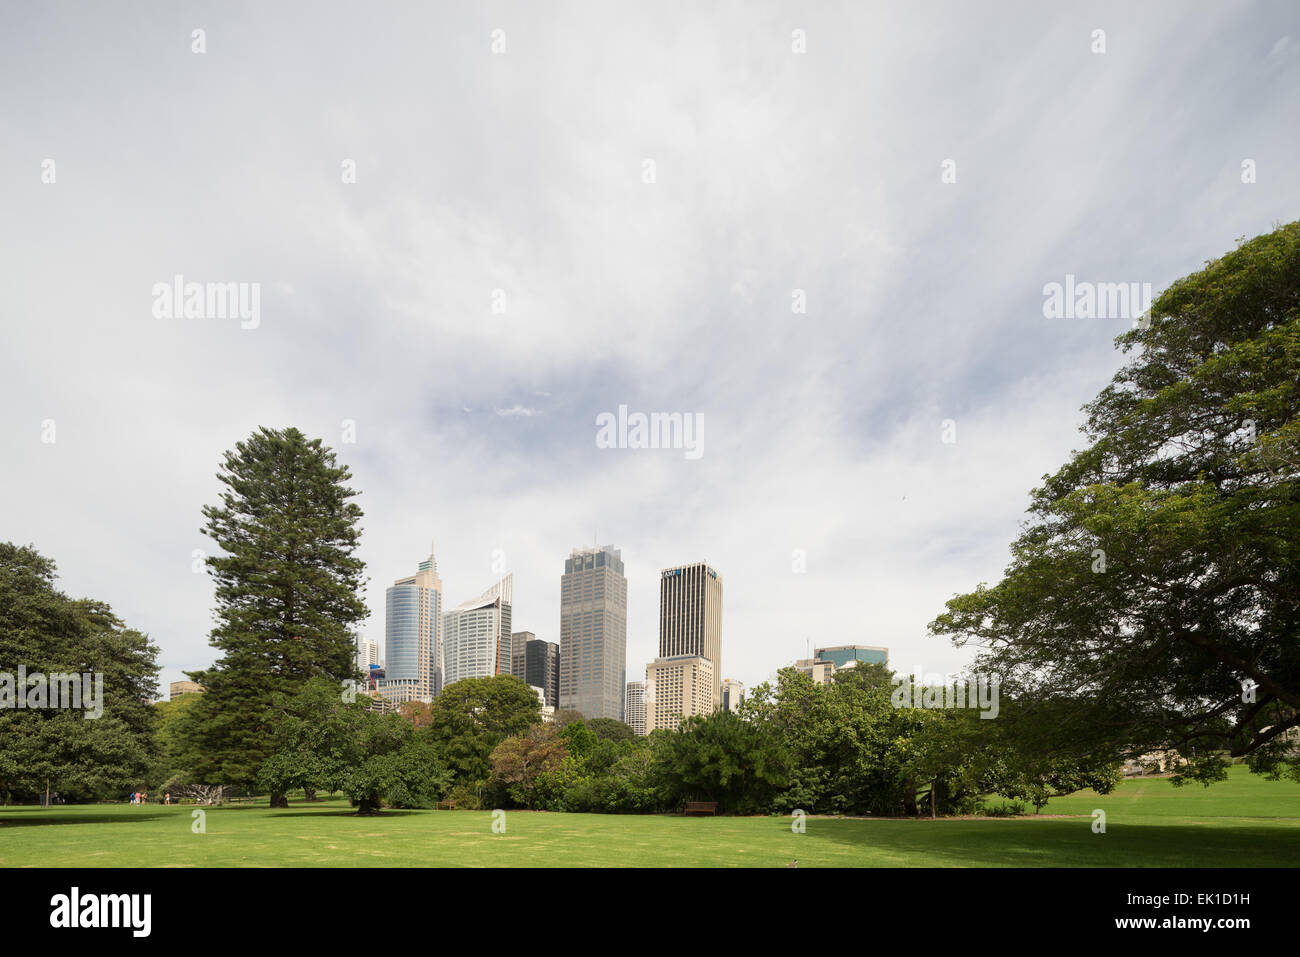 Sydney Australia skyline as seen from the Royal Botanic Gardens. Stock Photo